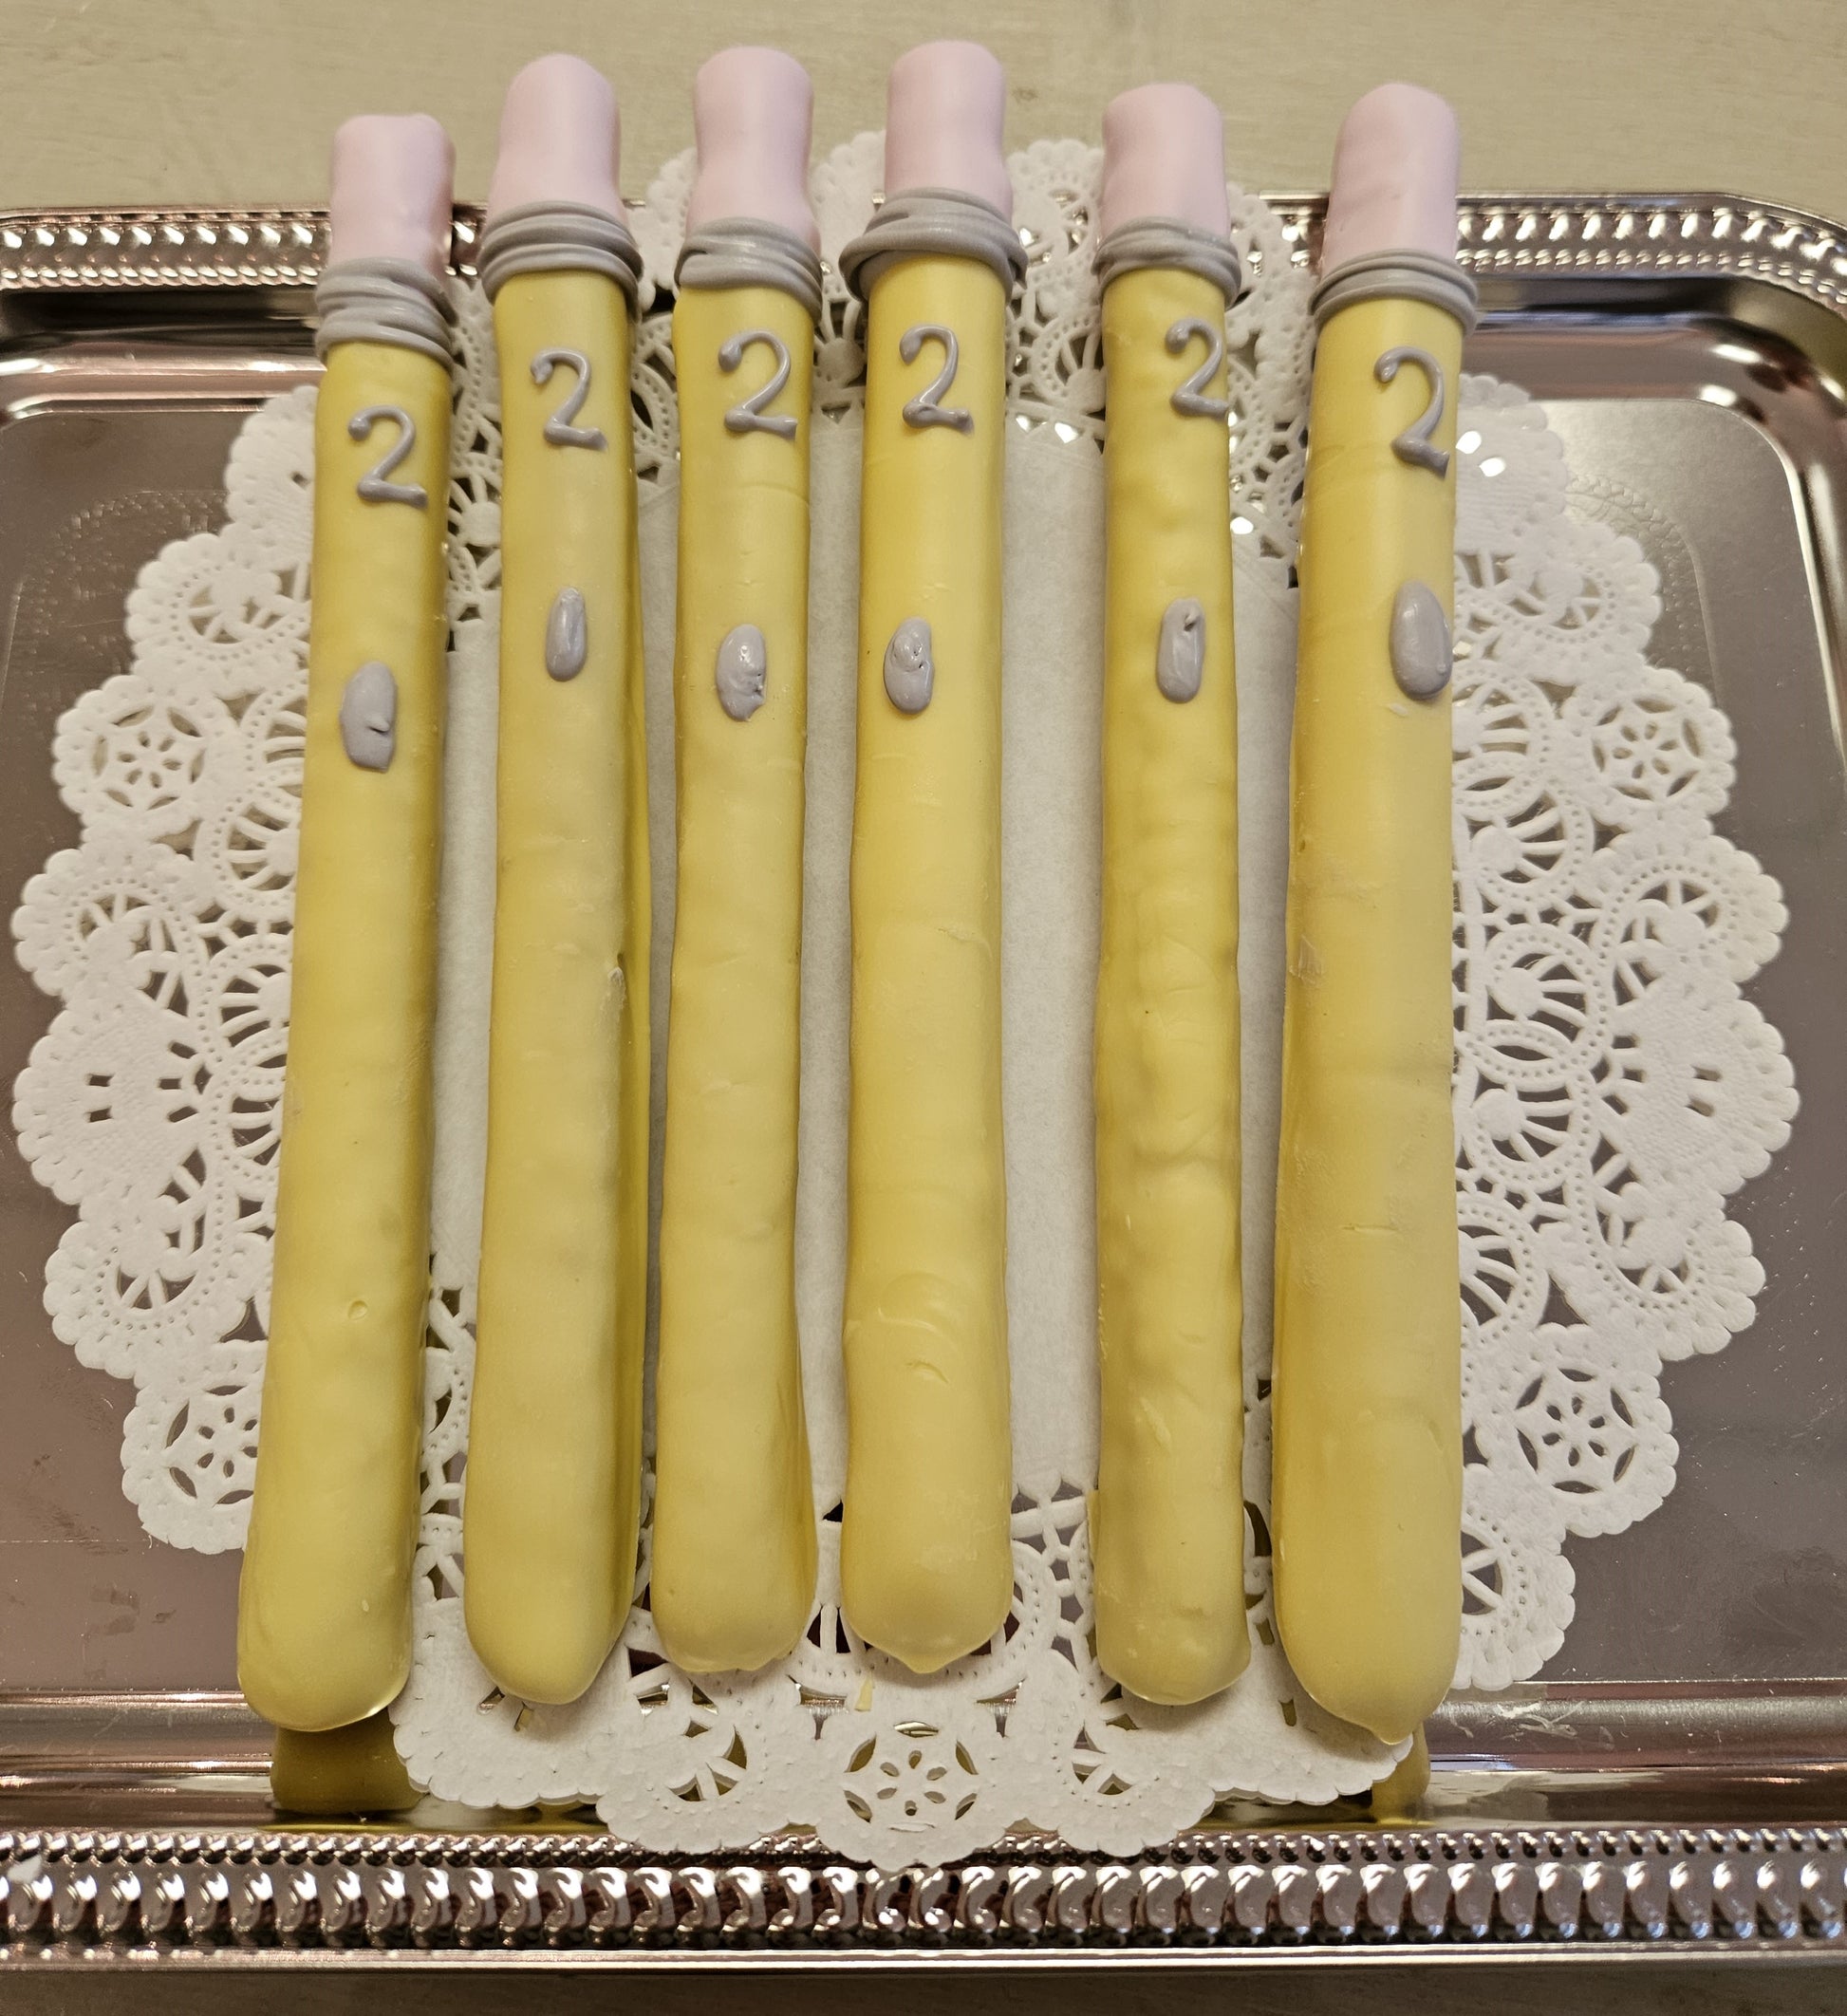 Pencil Pretzel Rods - The Dessert Ladies